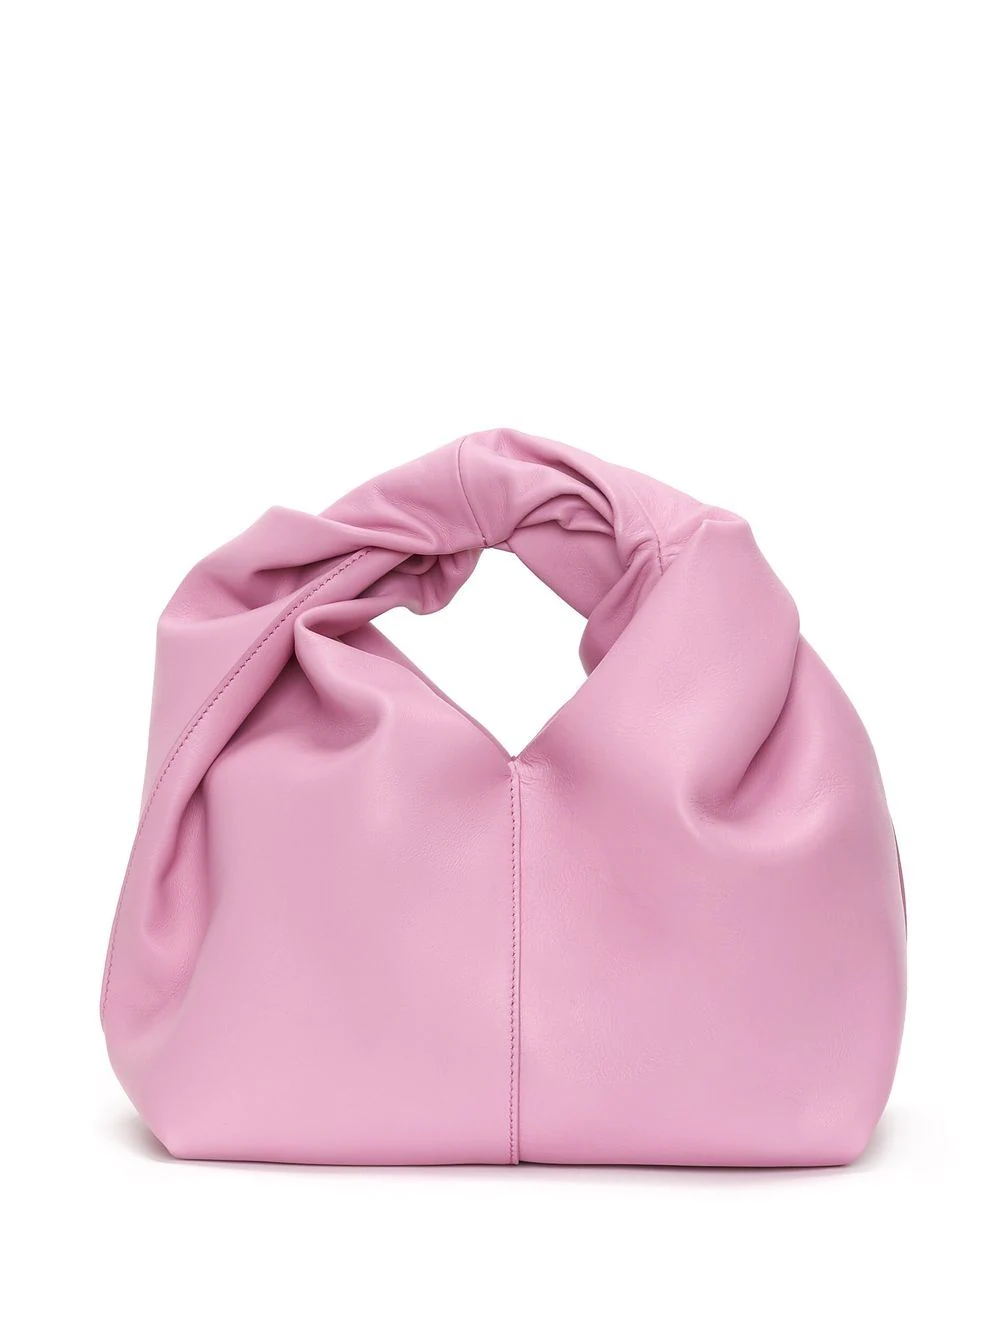 10 Stunning Designer Bags Under 500 That Won't Break Your Bank!